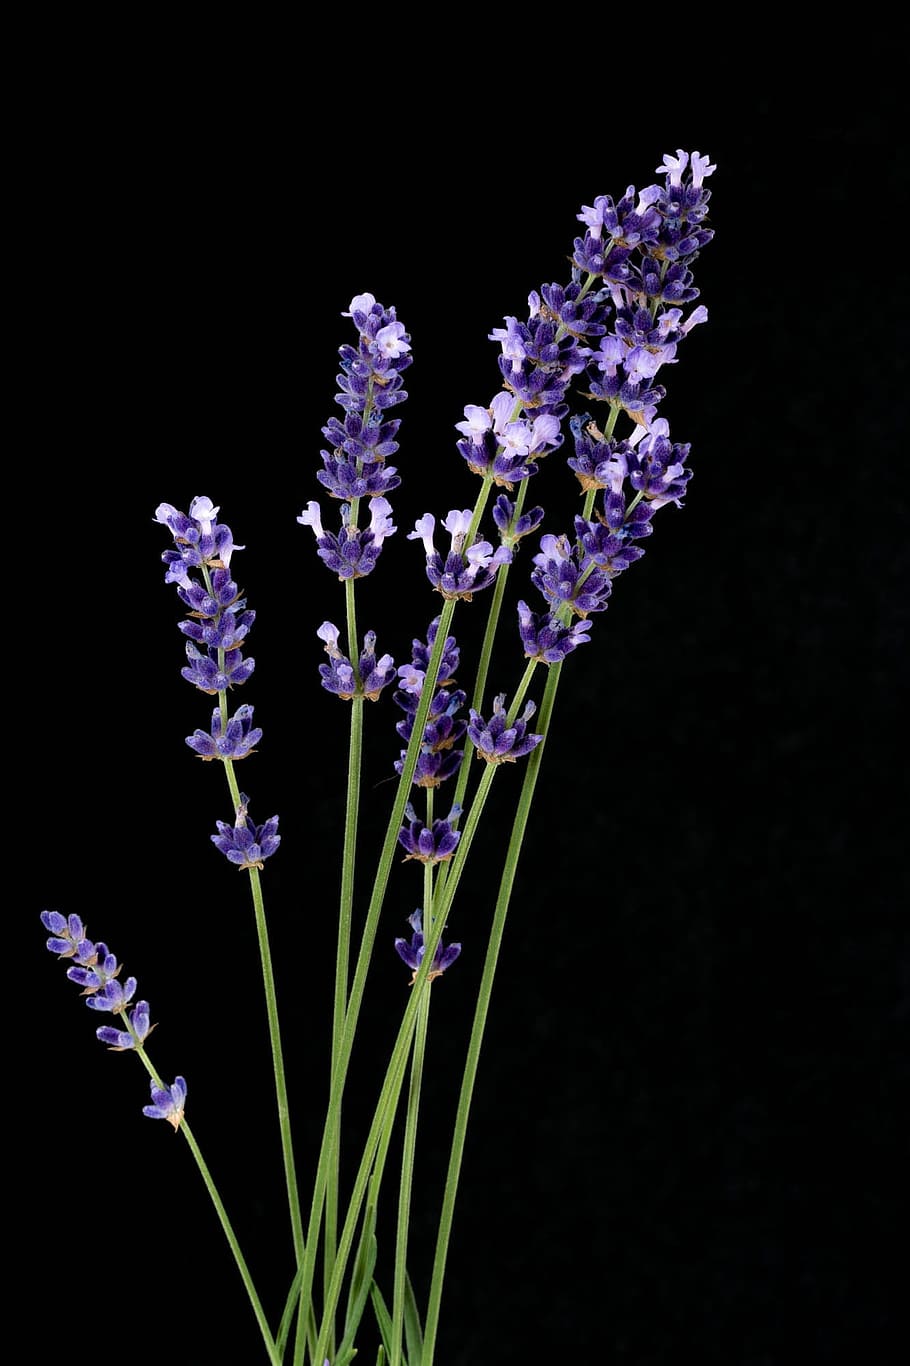 selective, focus photo, purple, french, flowers, Lavender, Nature, black background, flower, plant